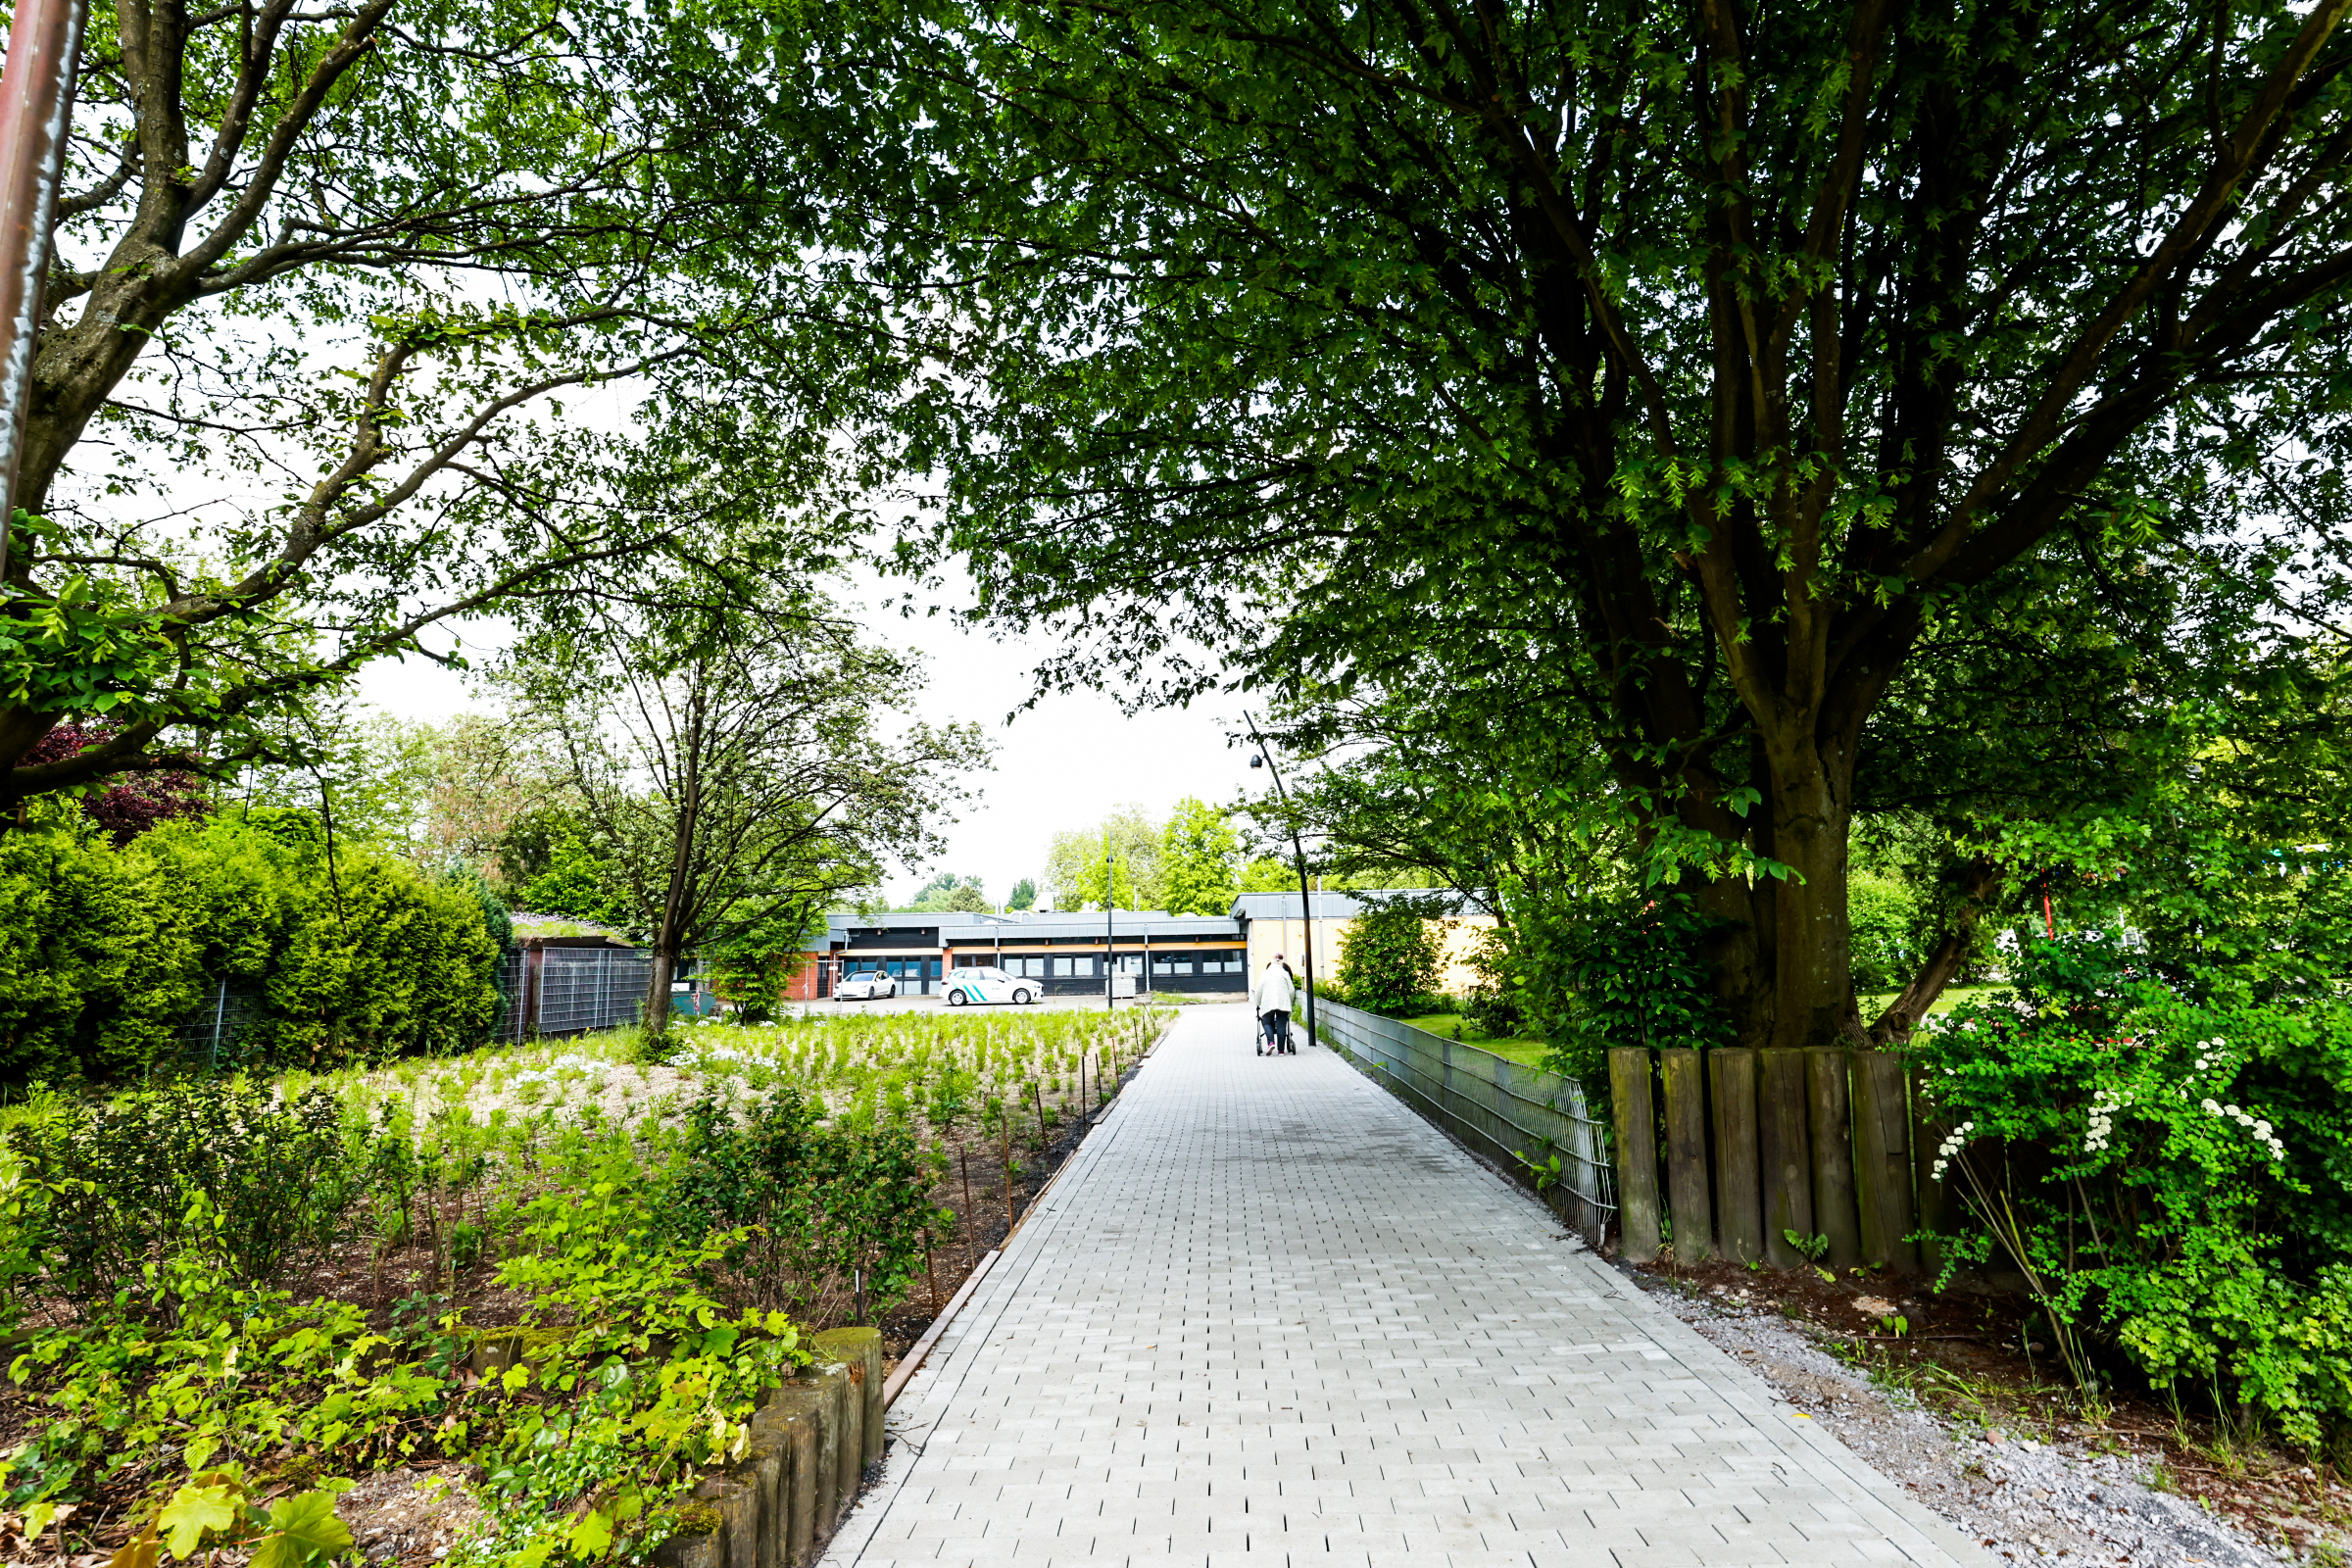 Barrierefreier Zugang zum Revierpark Nienhausen in Gelsenkirchen